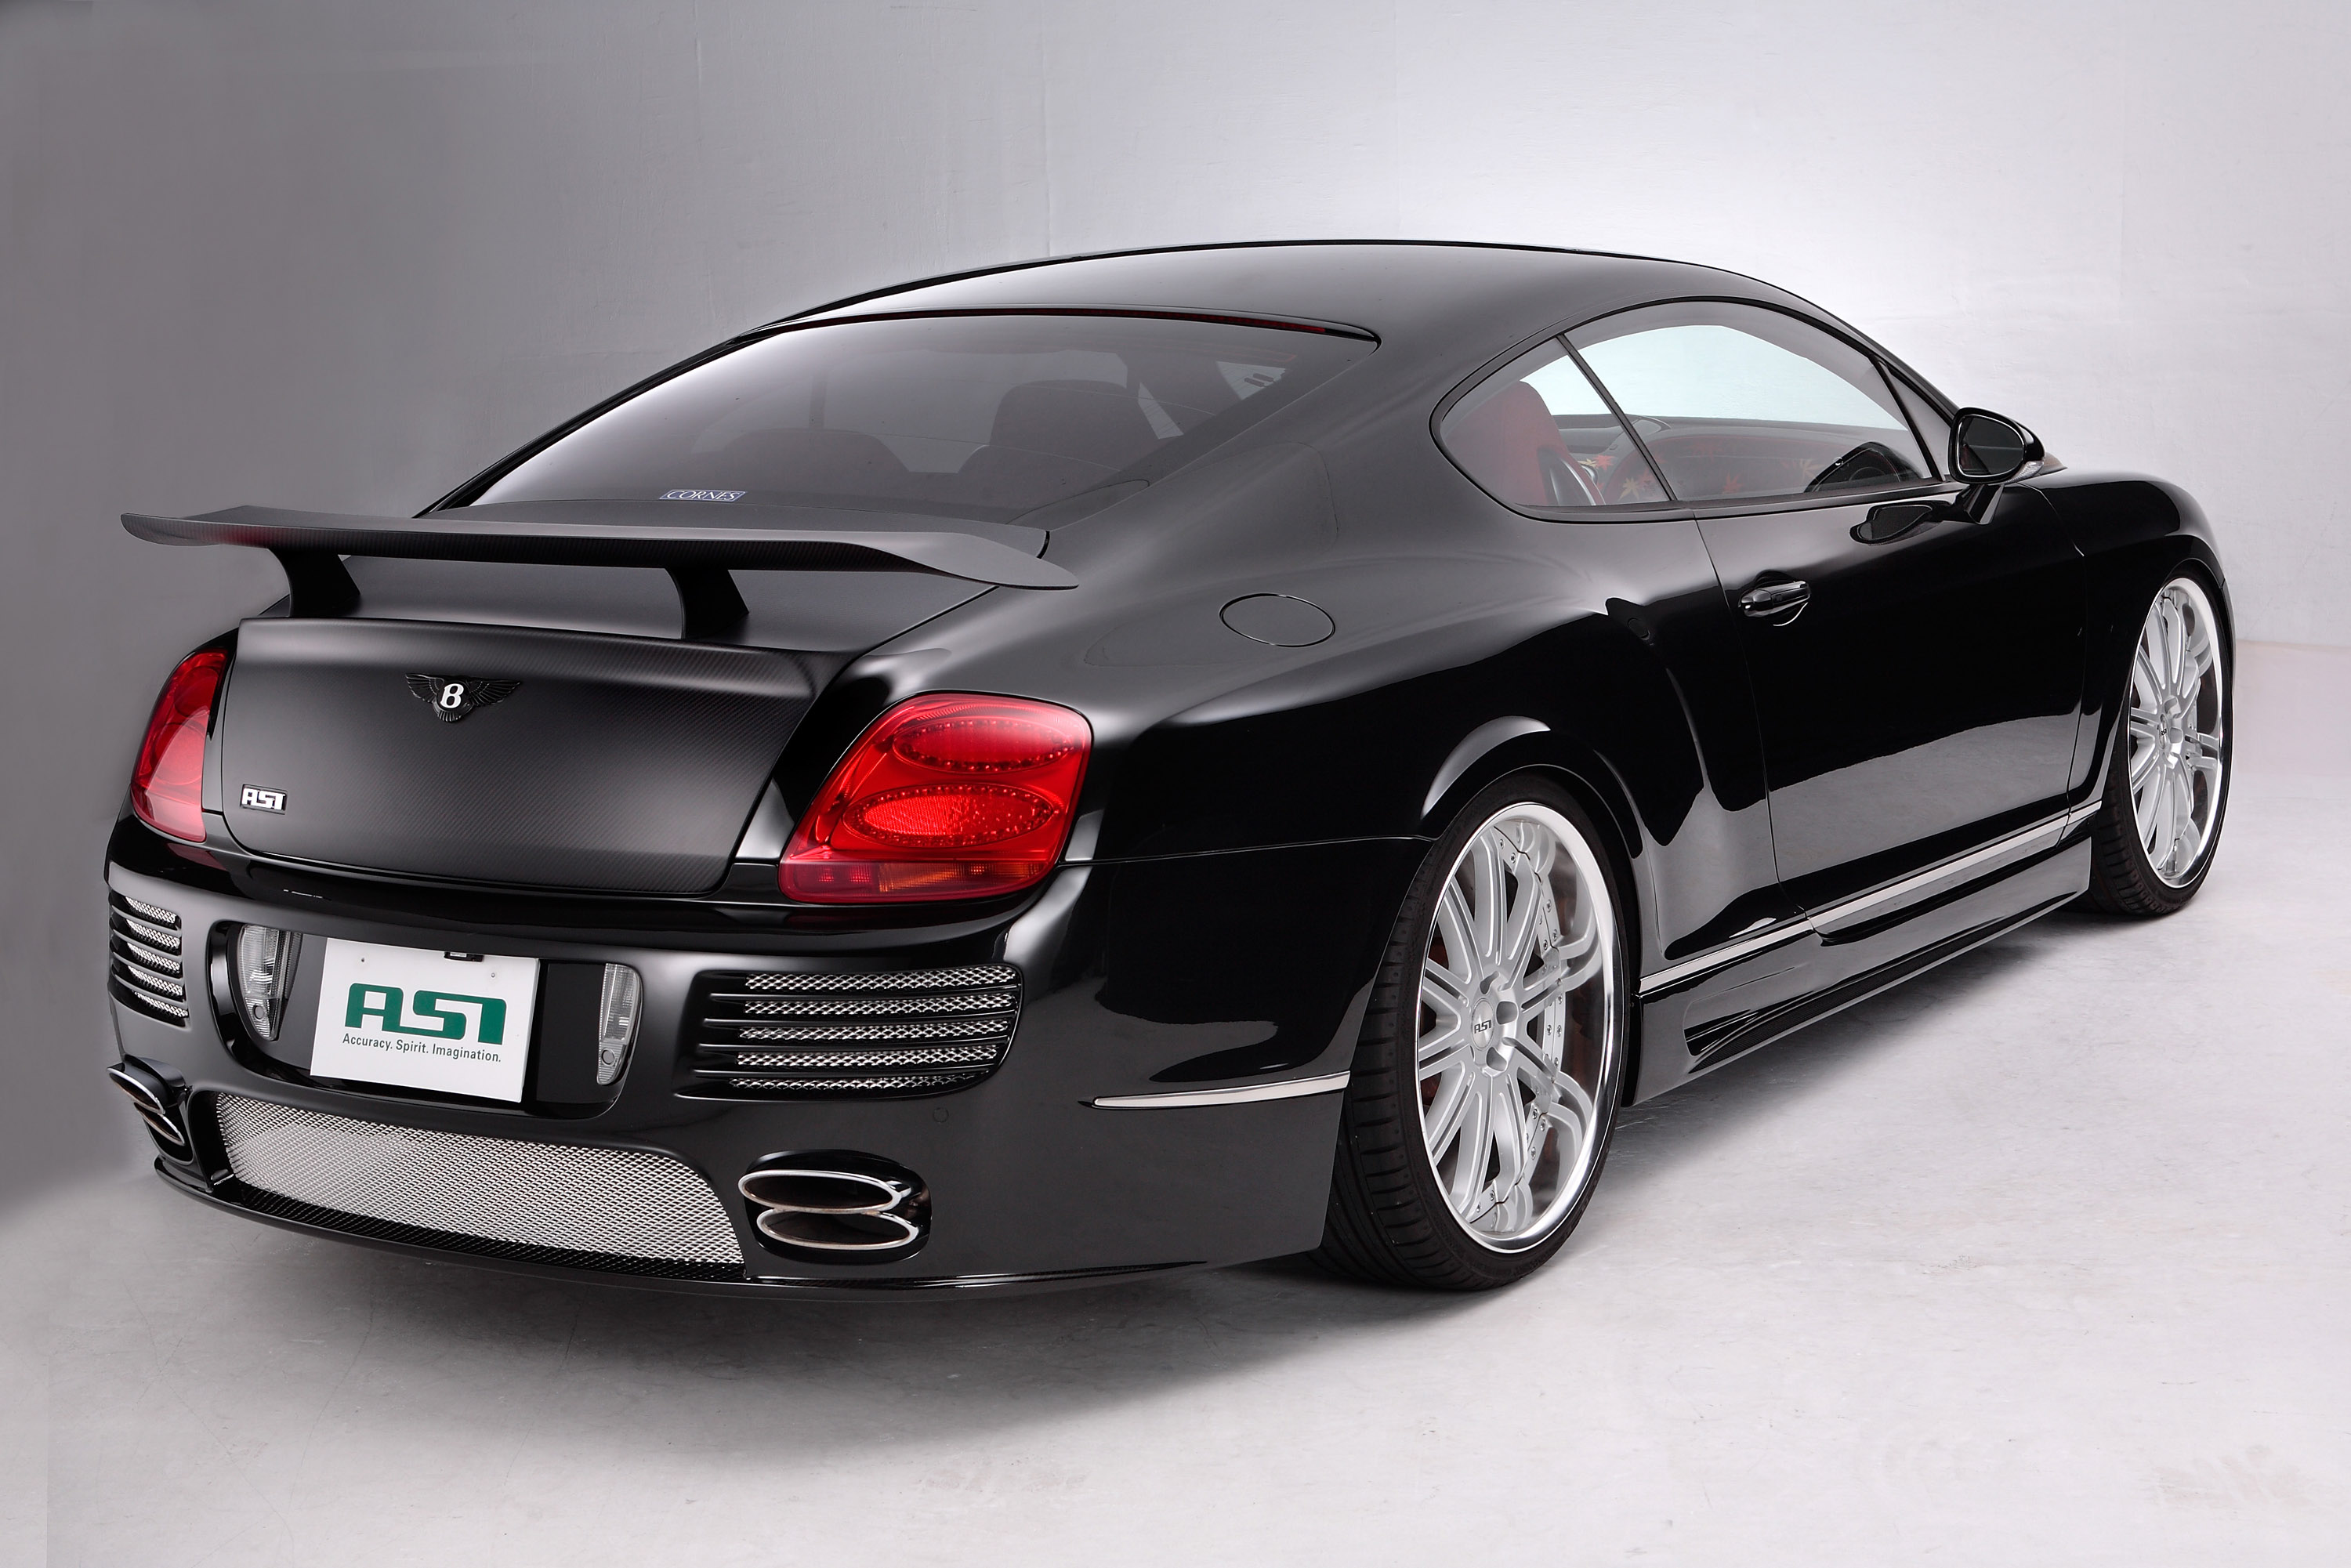 ASI Bentley Continental GT